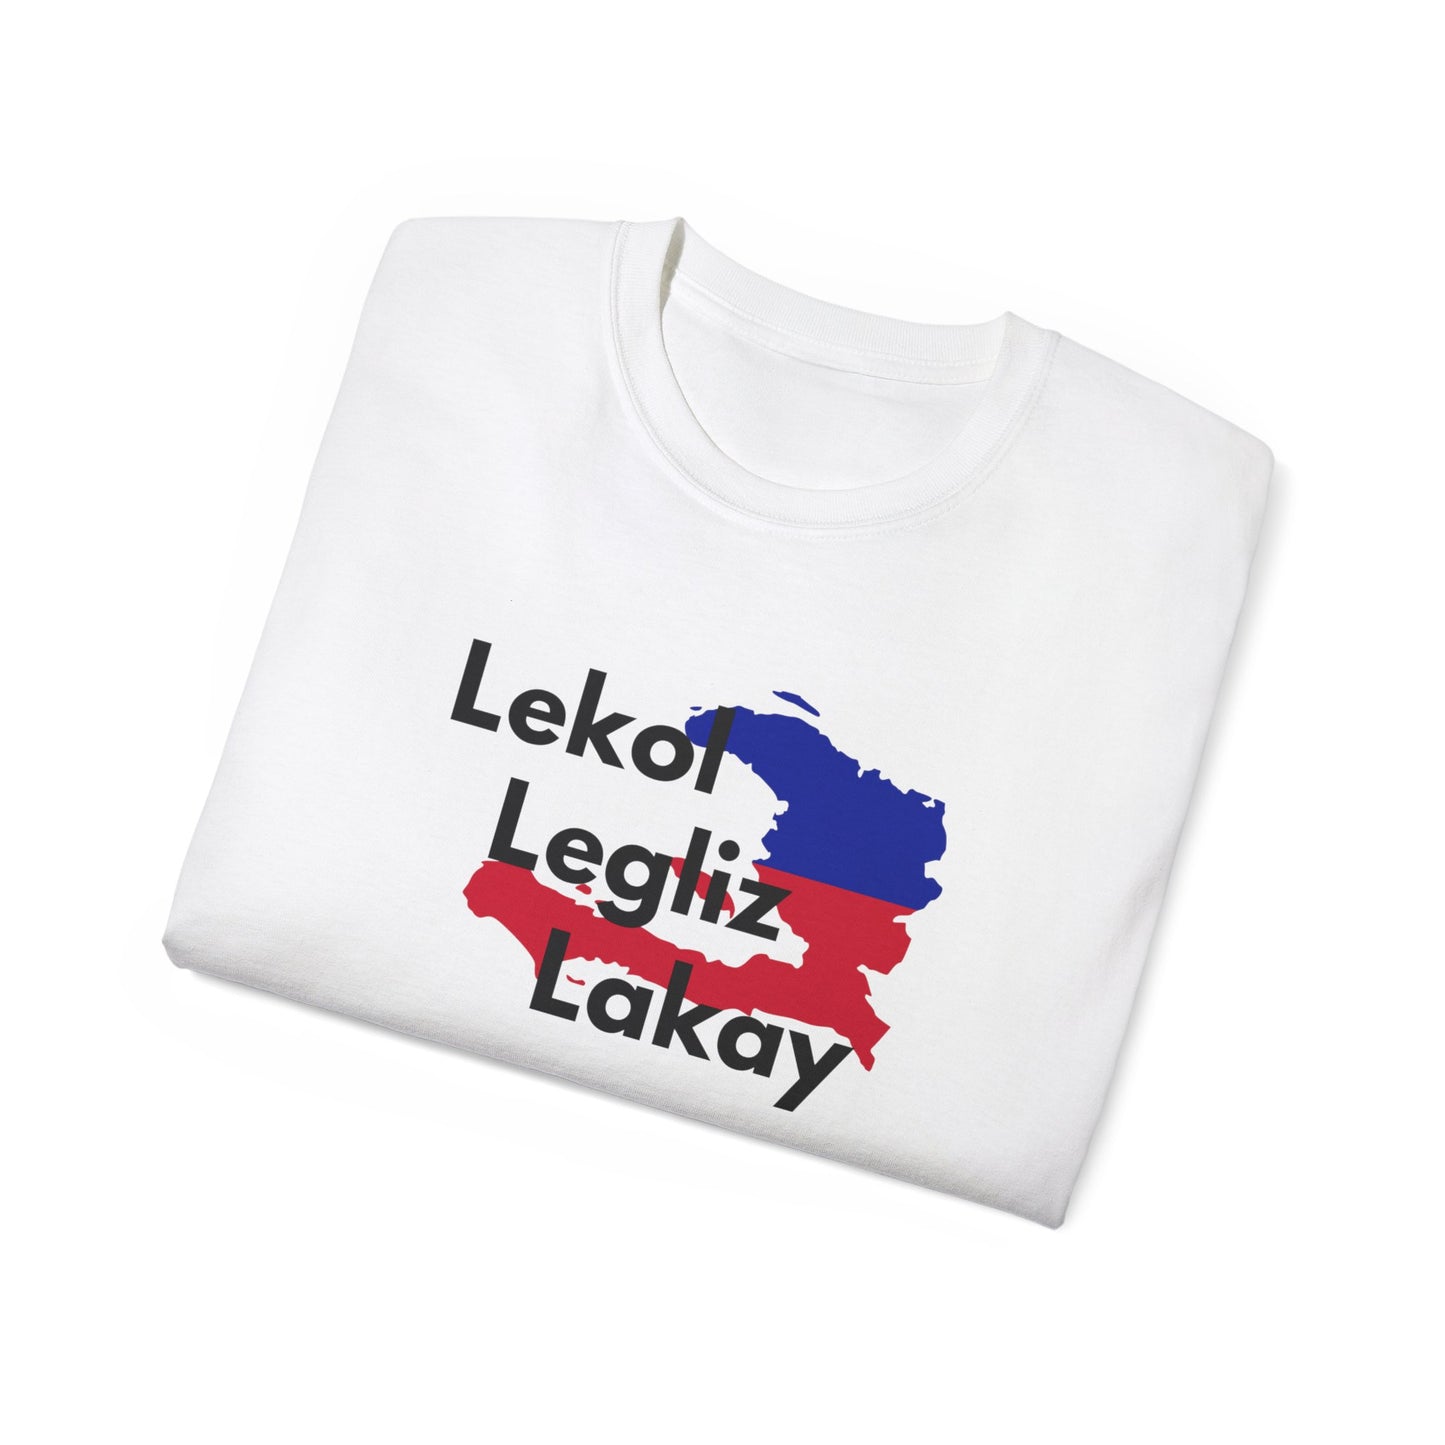 Lekol Legliz Lakay Tee Shirt - Sand / Tan